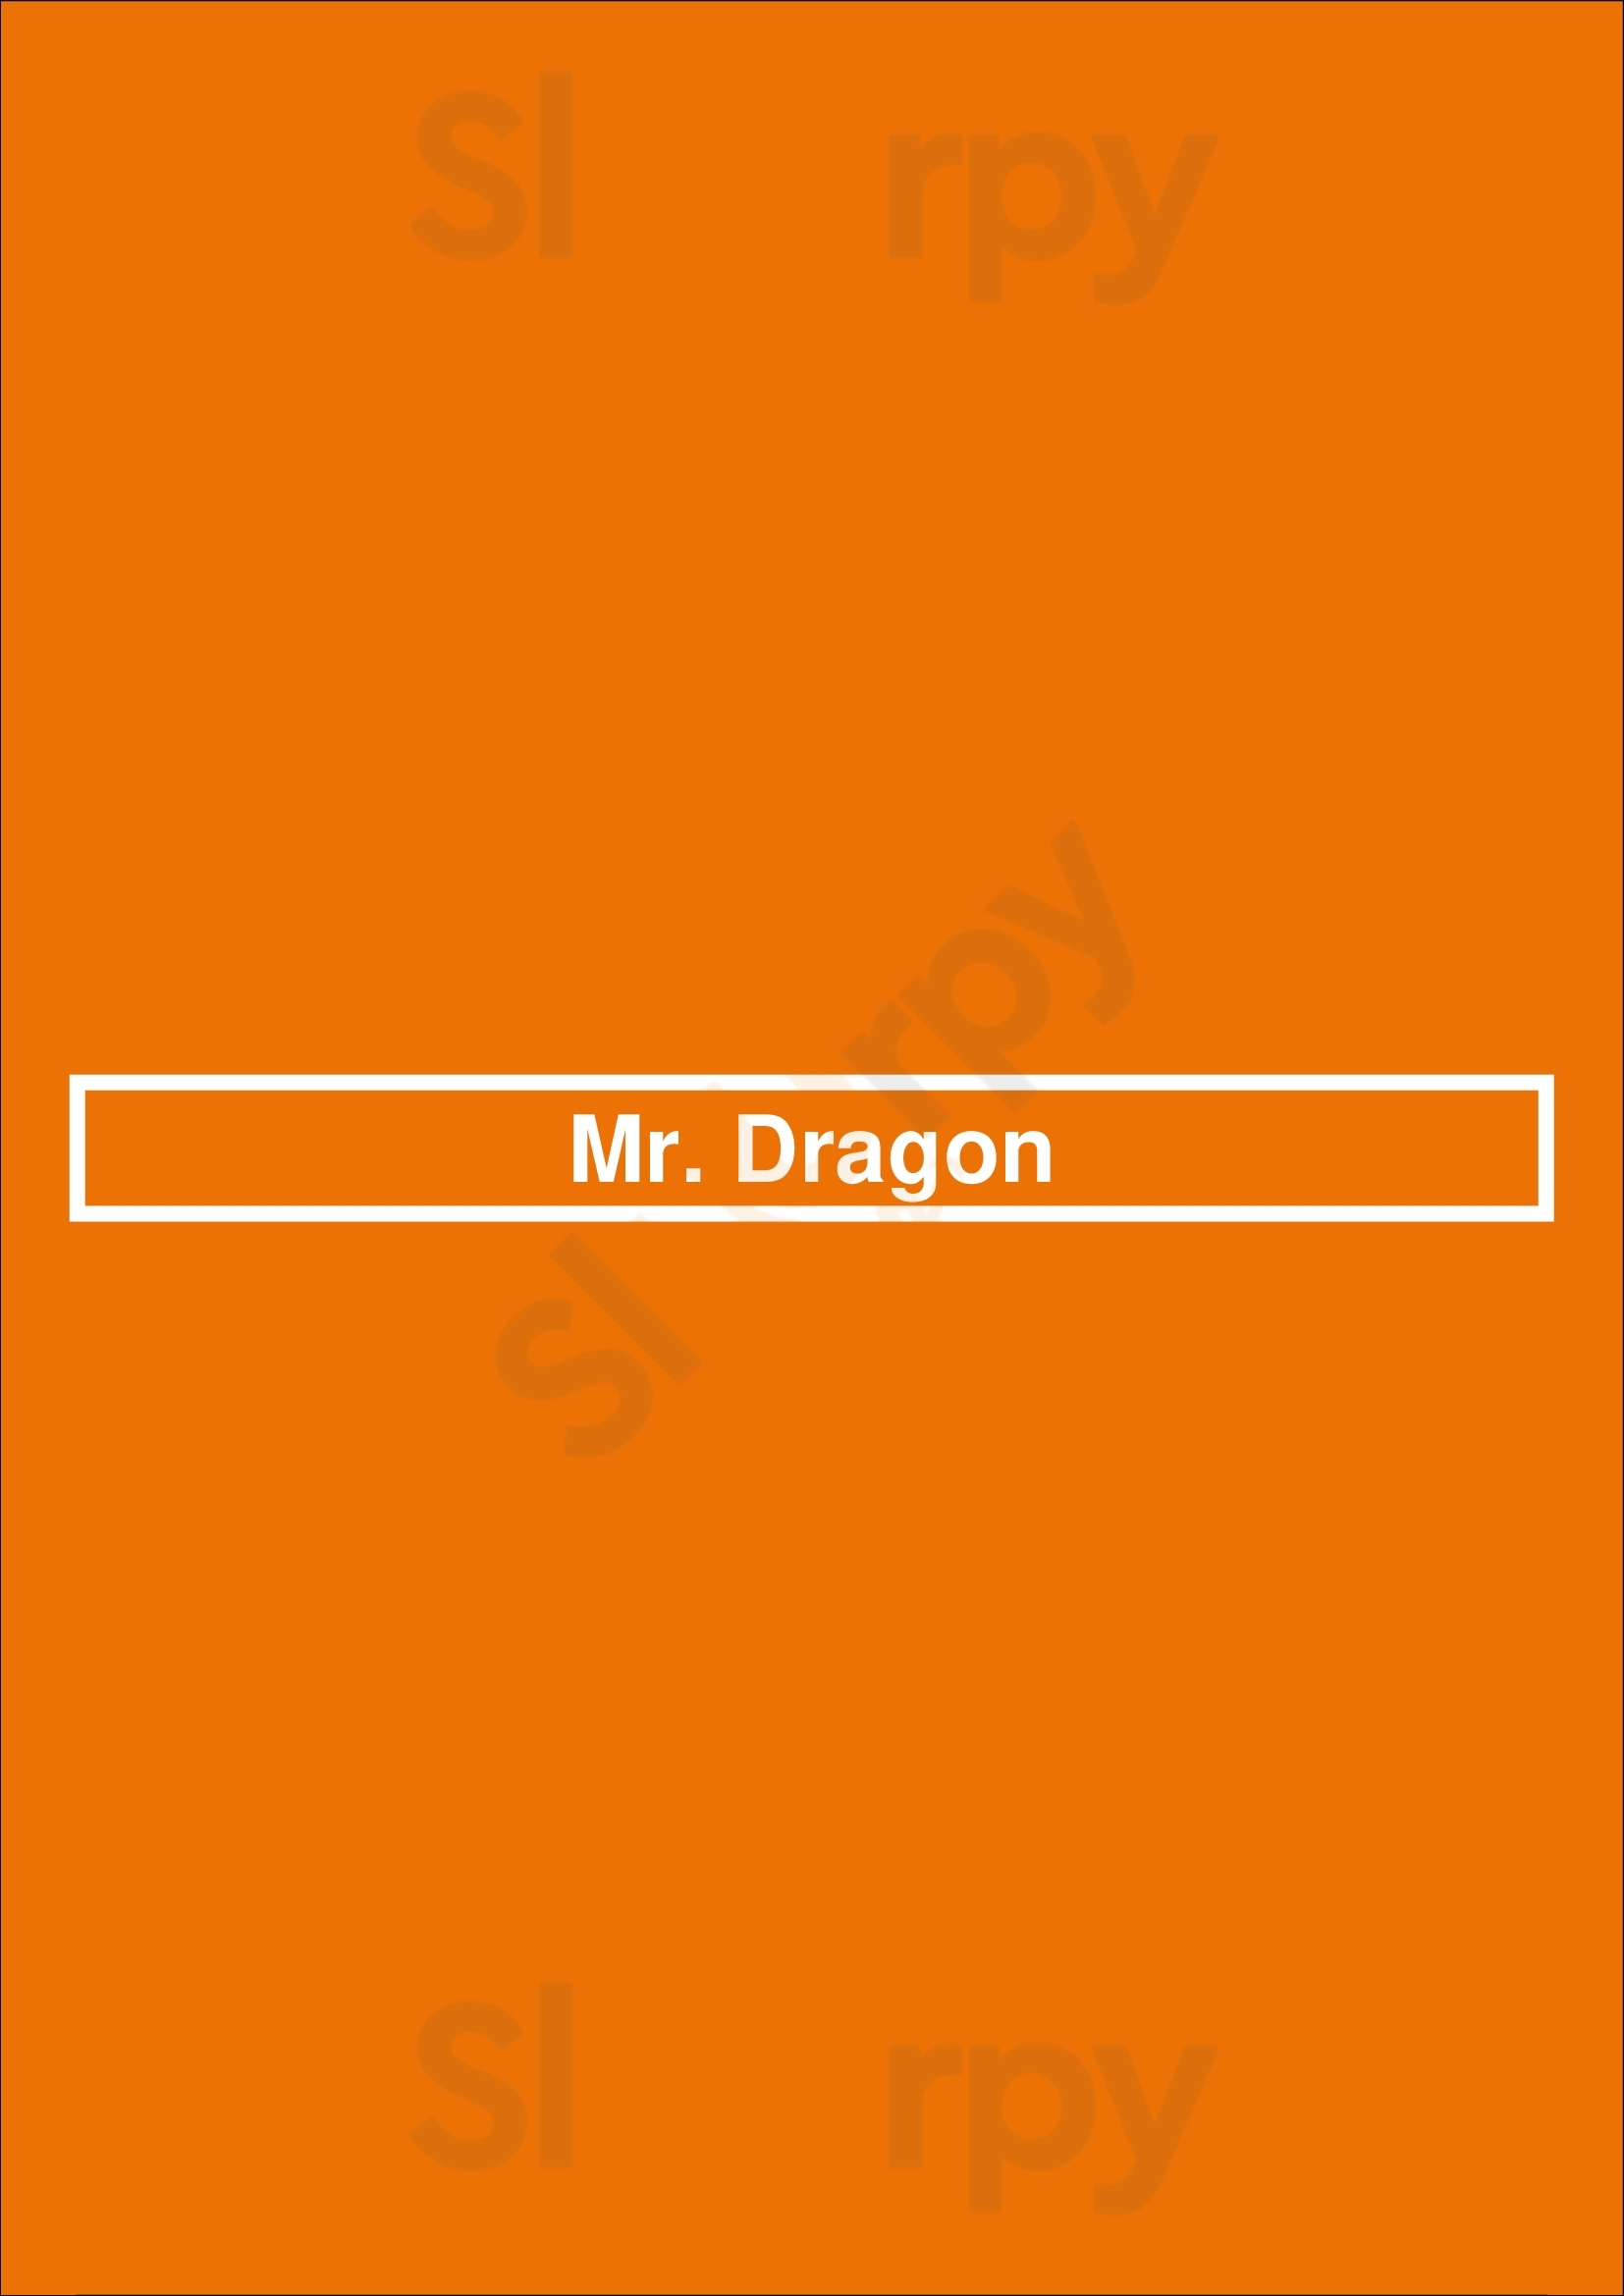 Mr. Dragon Chinese Restaurant Jacksonville Menu - 1